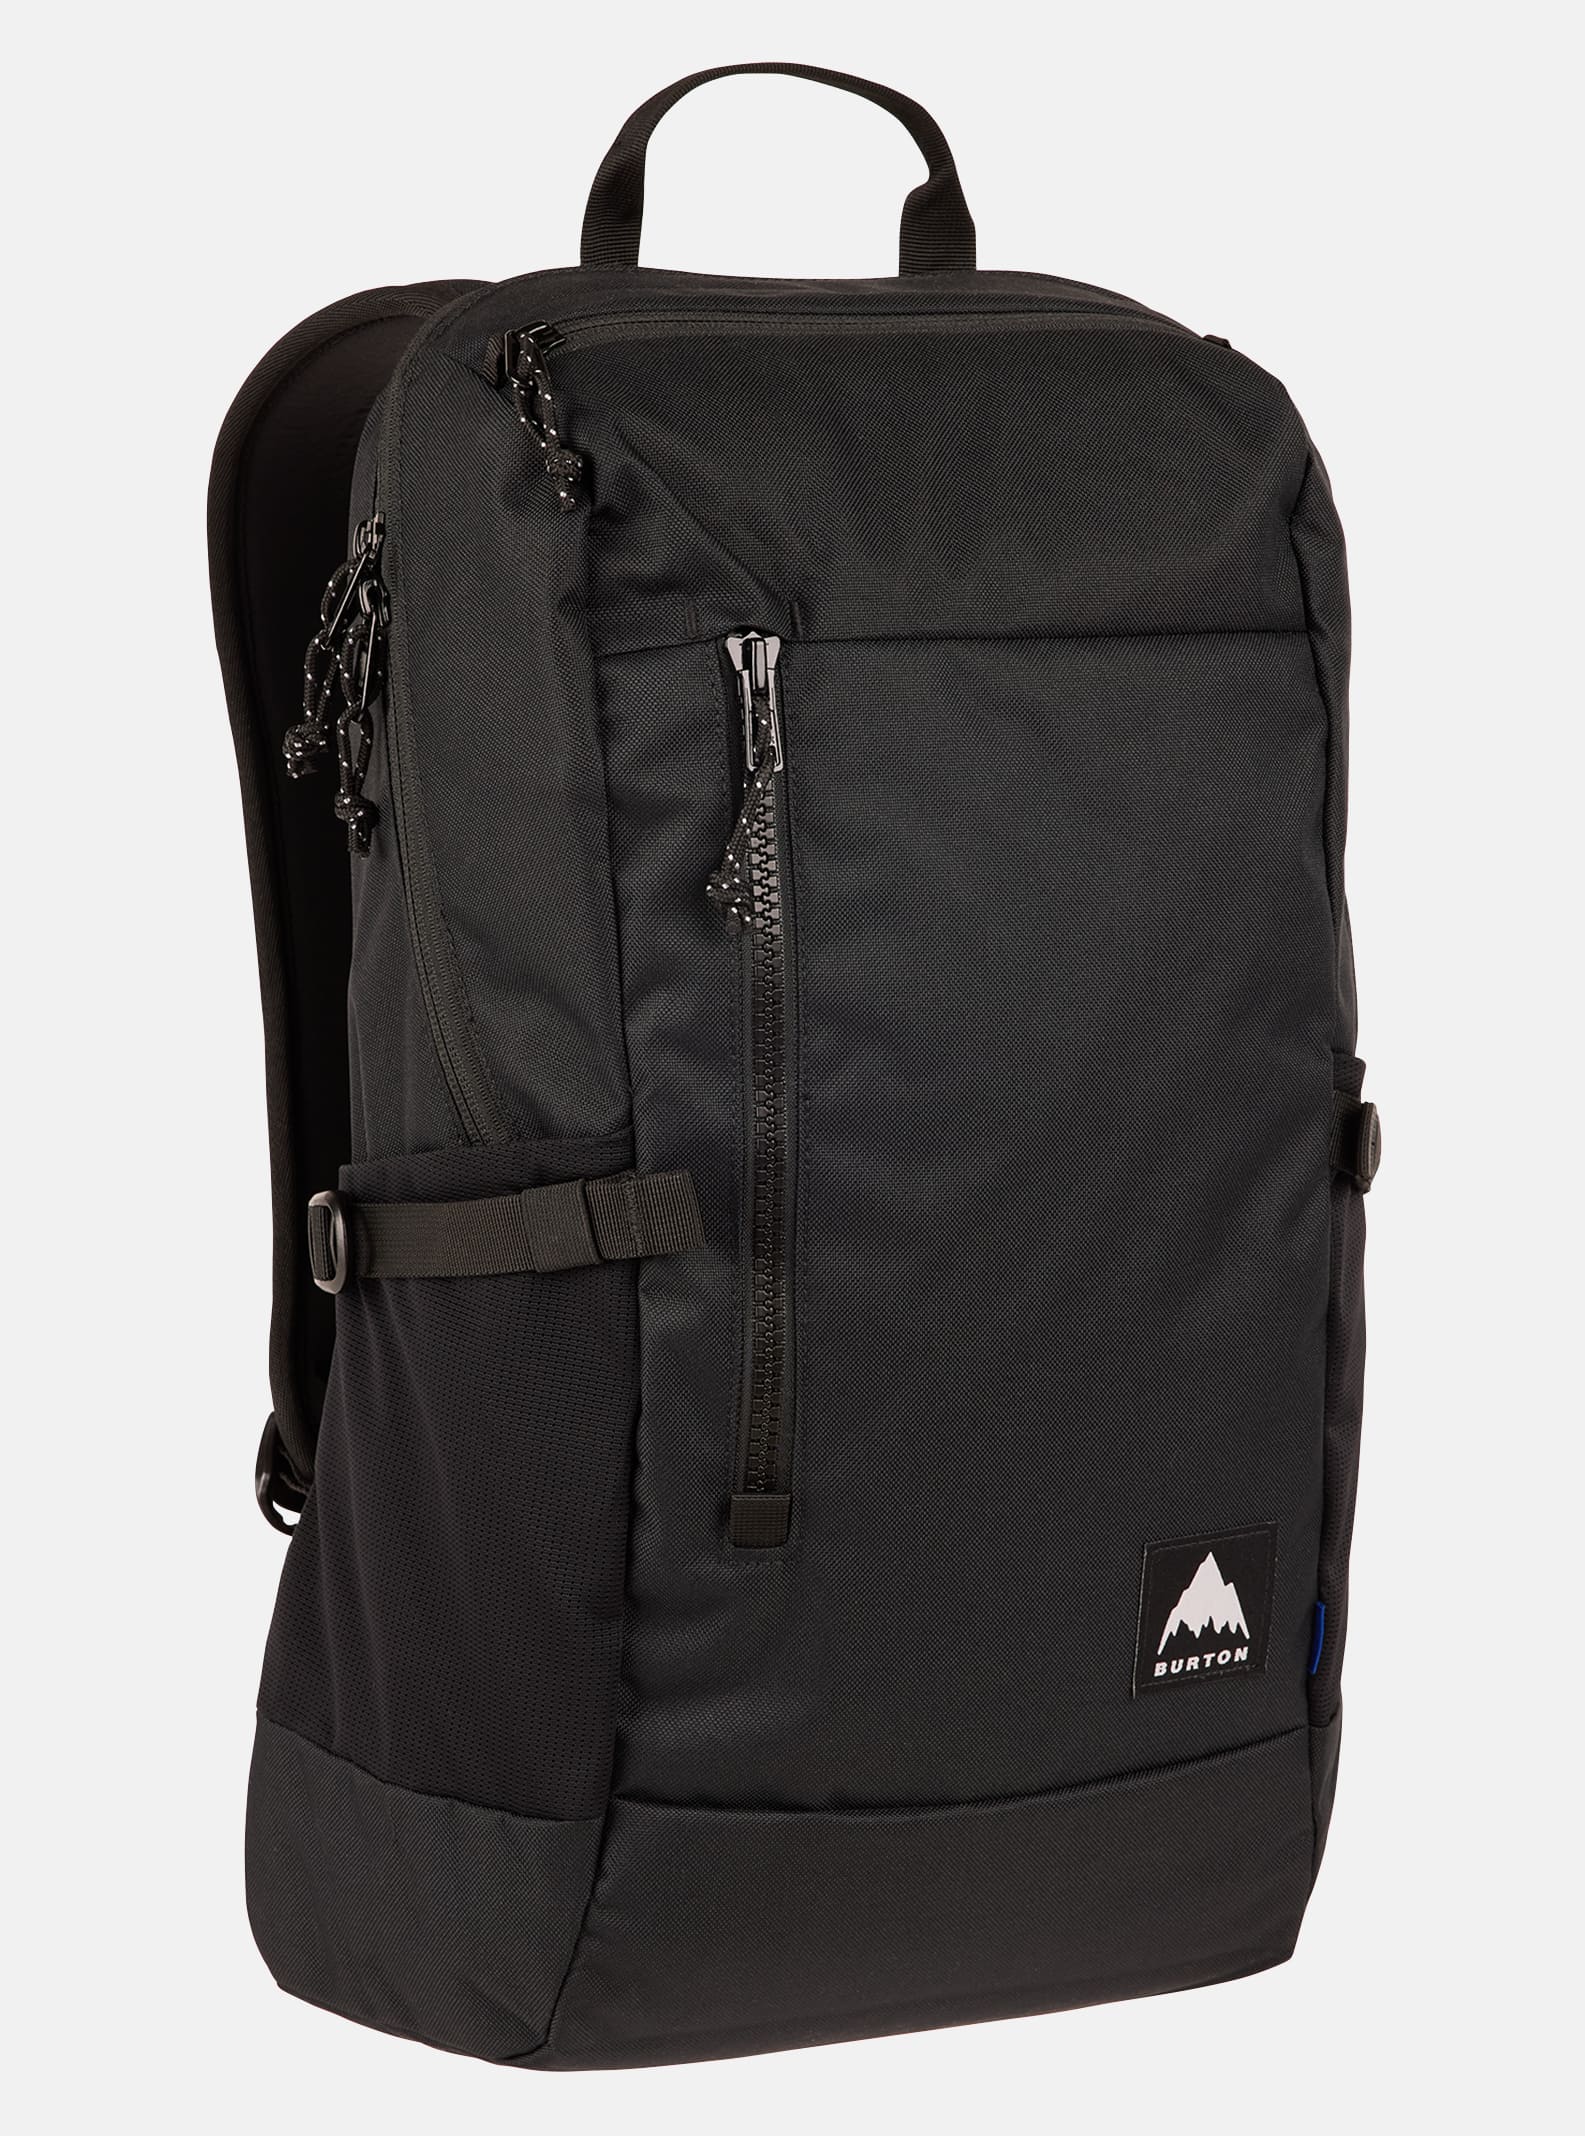 Prospect 2.0 20L Backpack | Burton.com Winter 2023 US